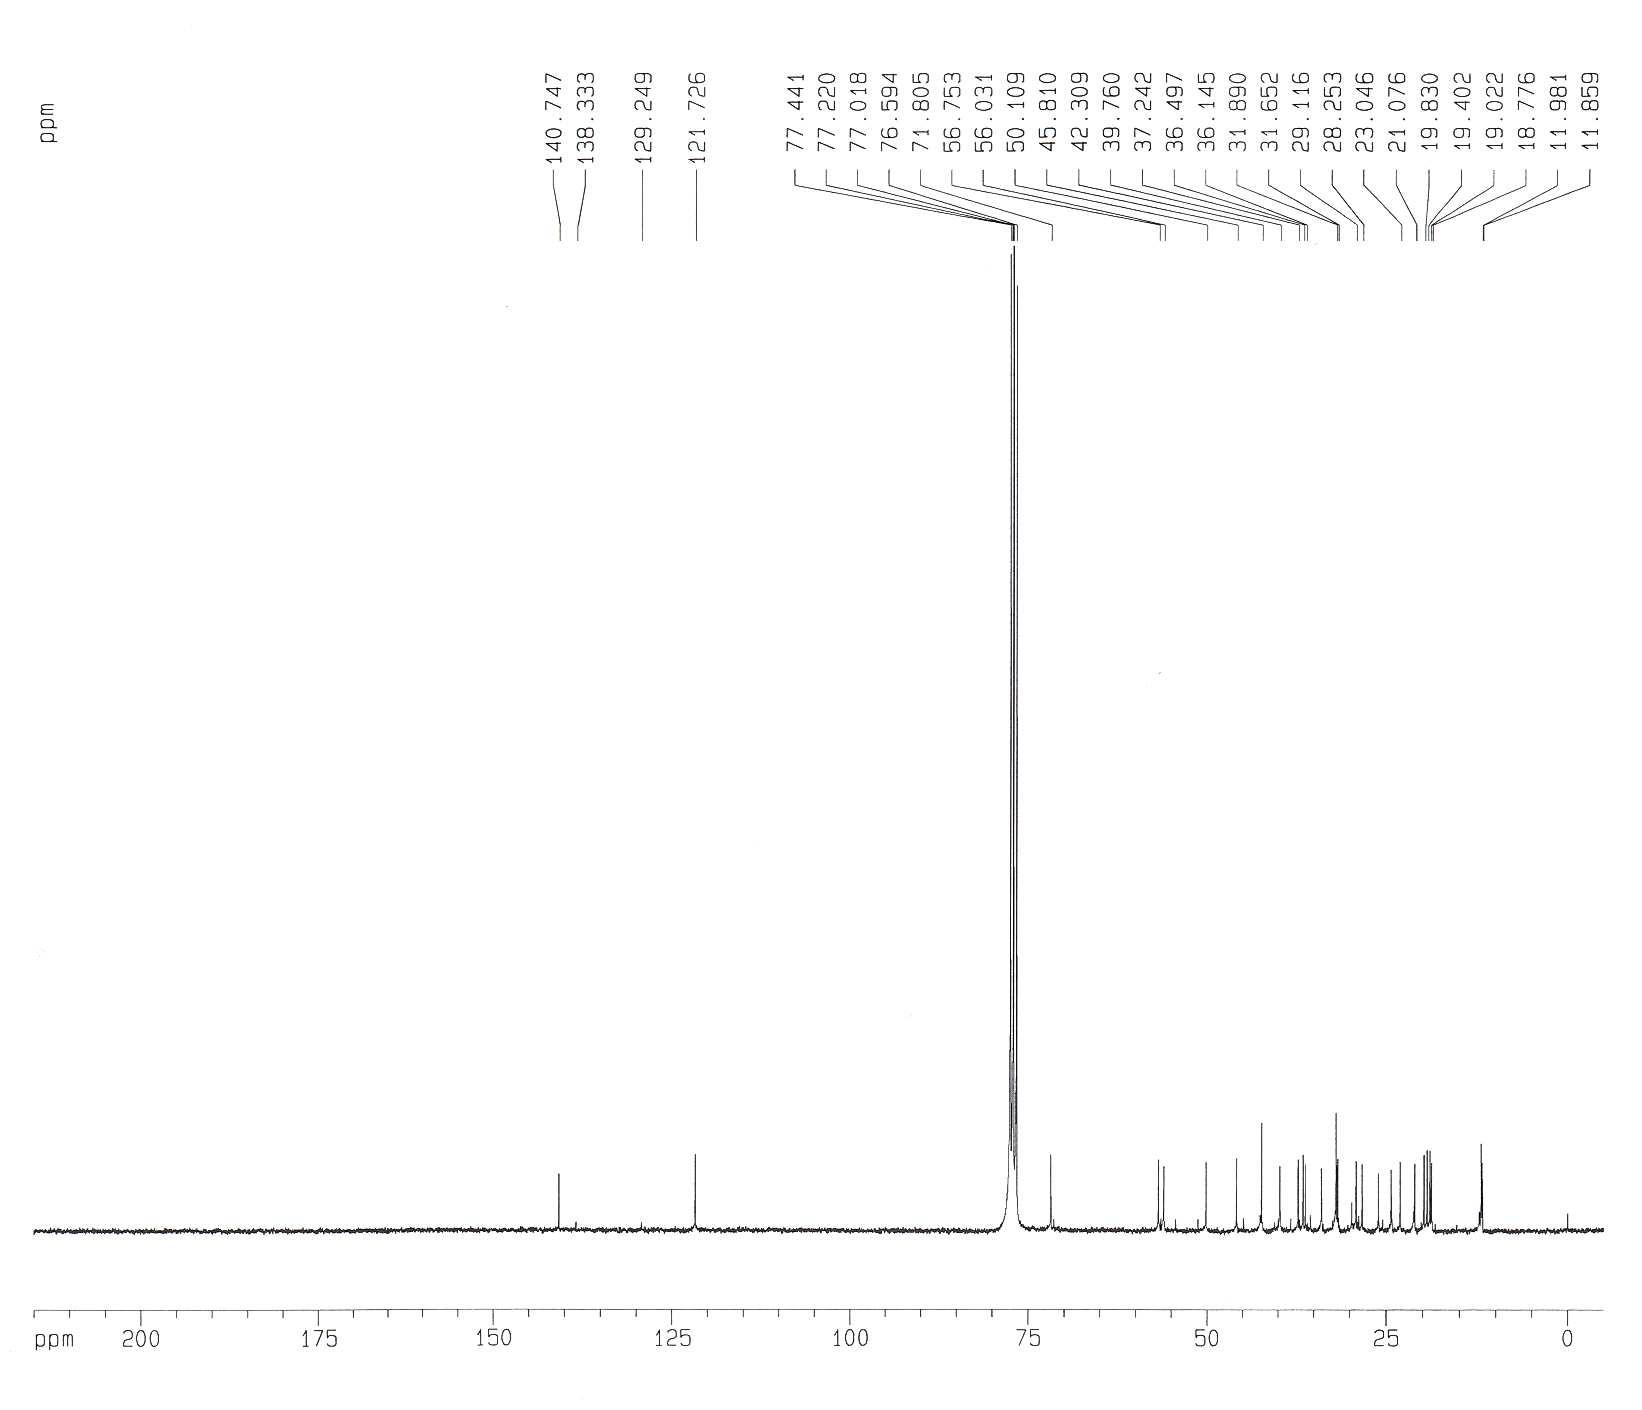 13C-NMR Spectrum of Compound 3